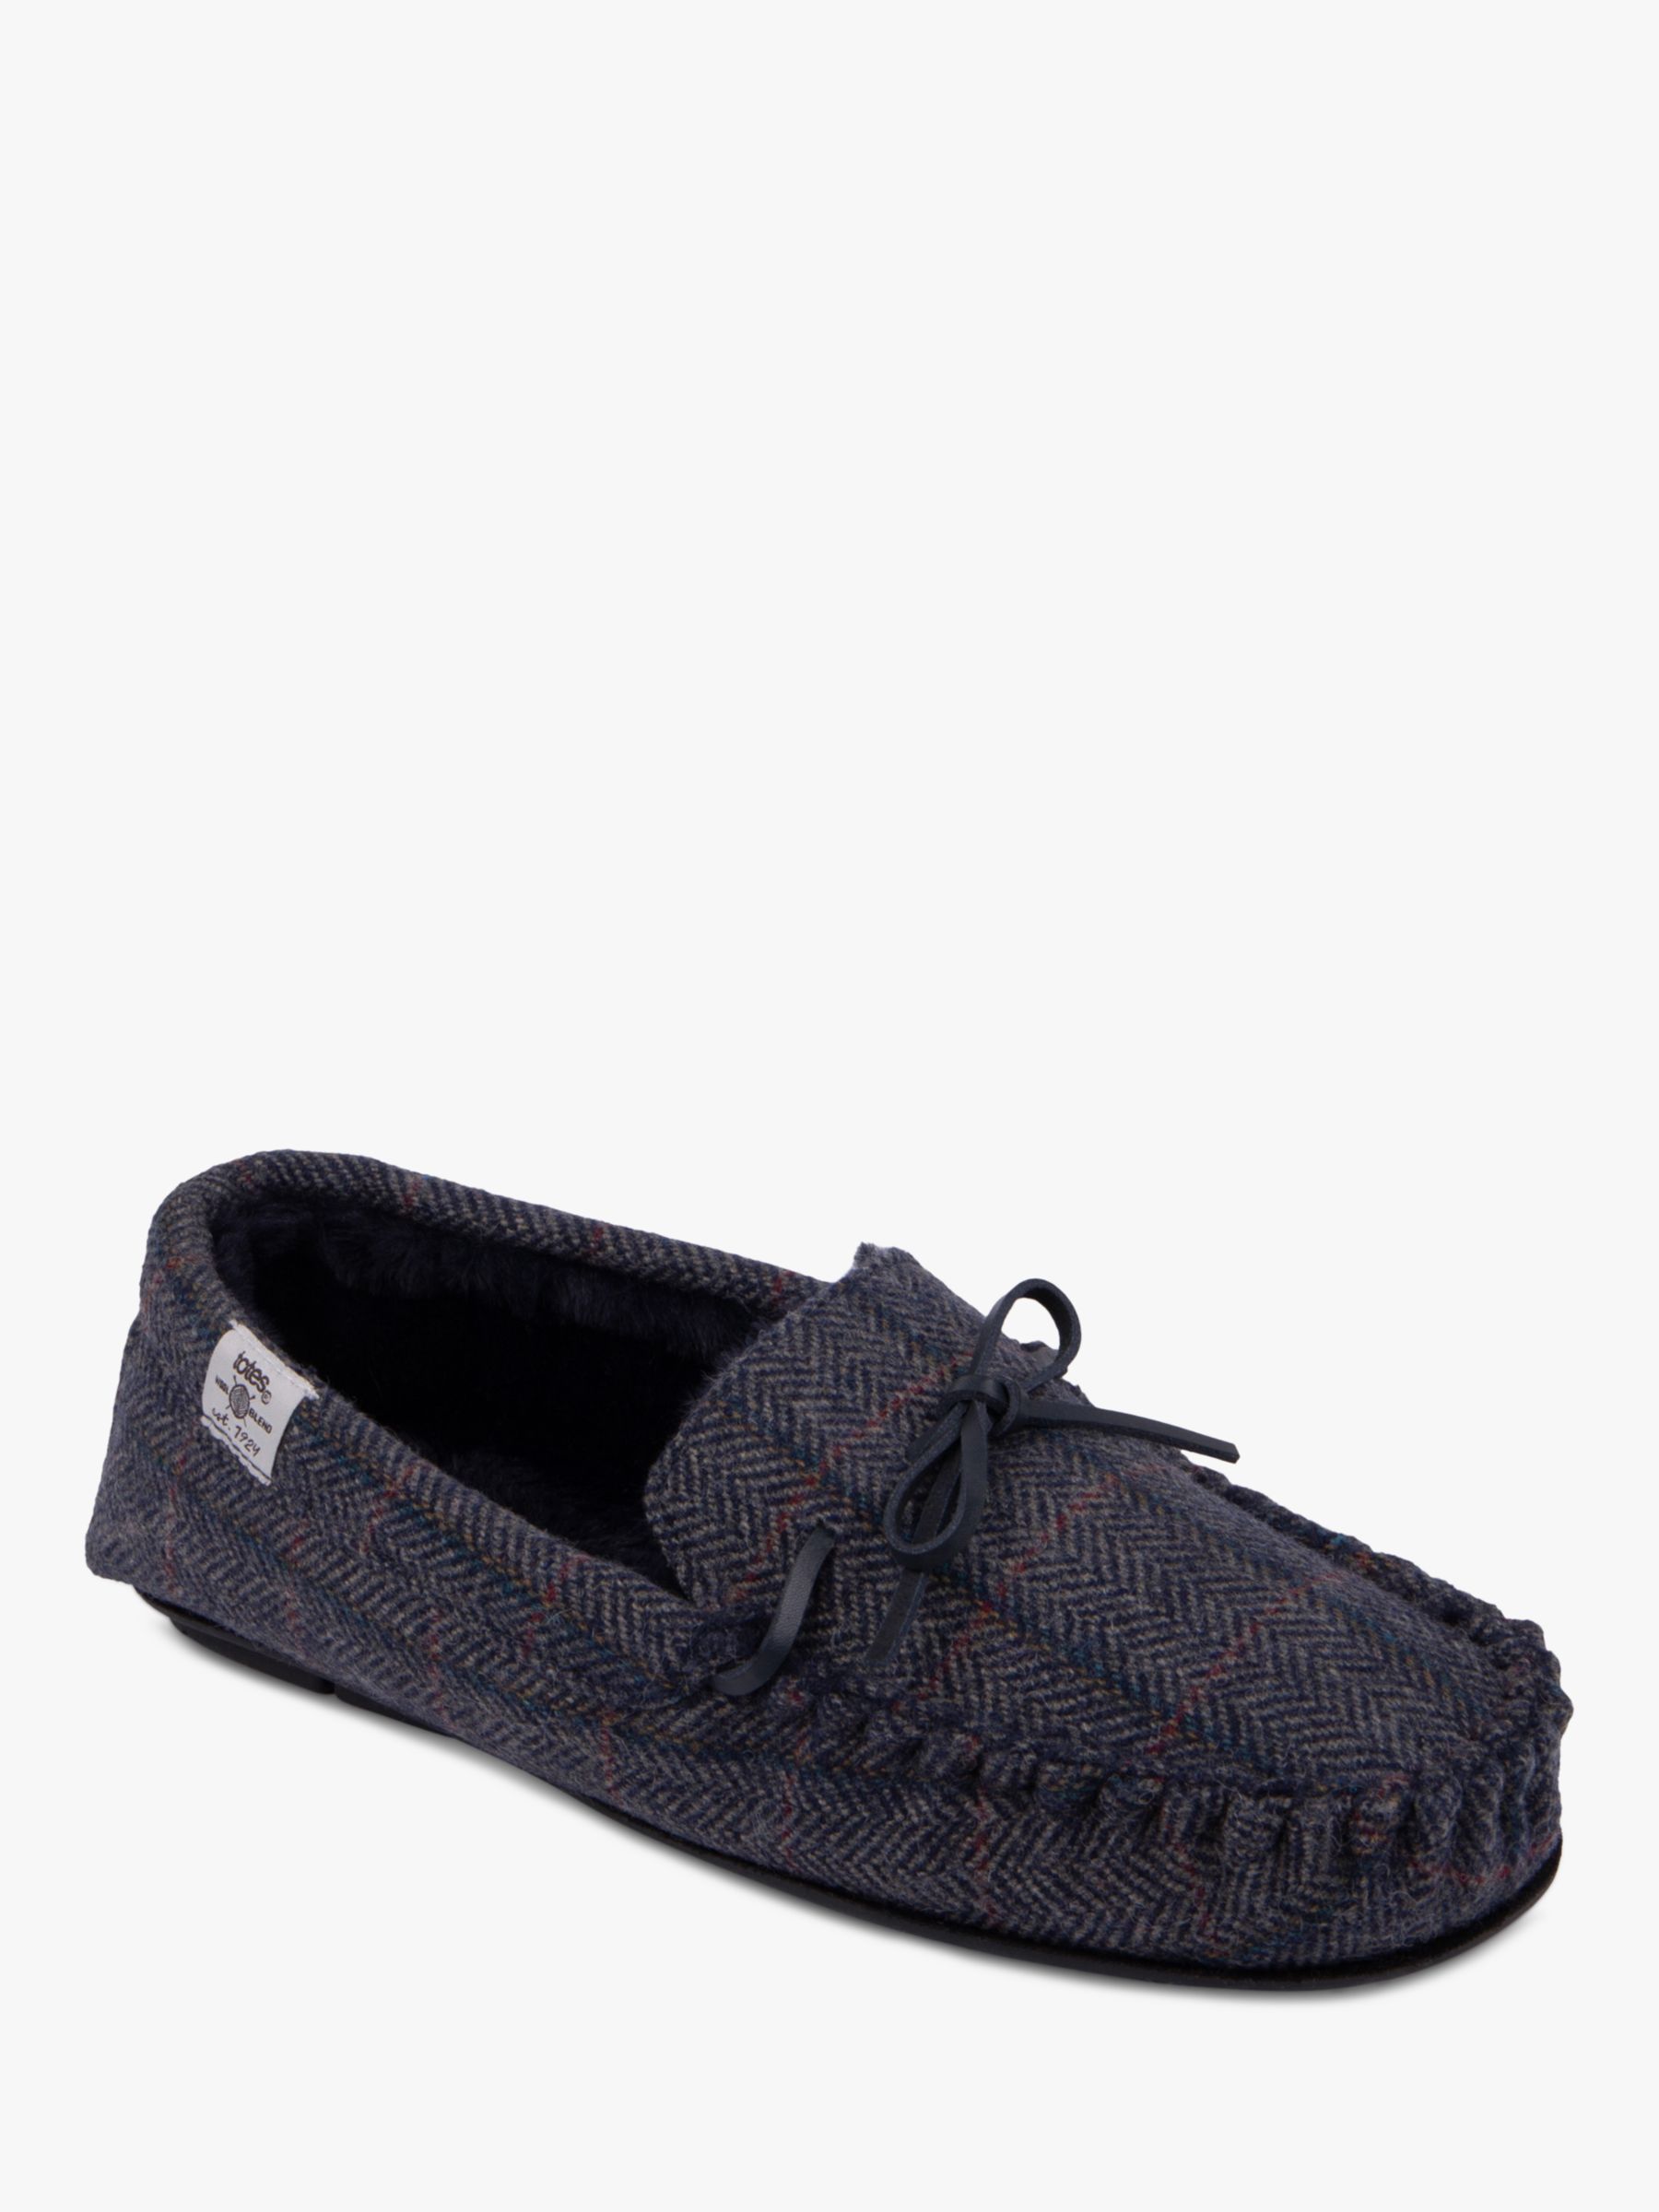 totes Herringbone Moccasin Style Wool Blend Slippers, Navy/Multi, S